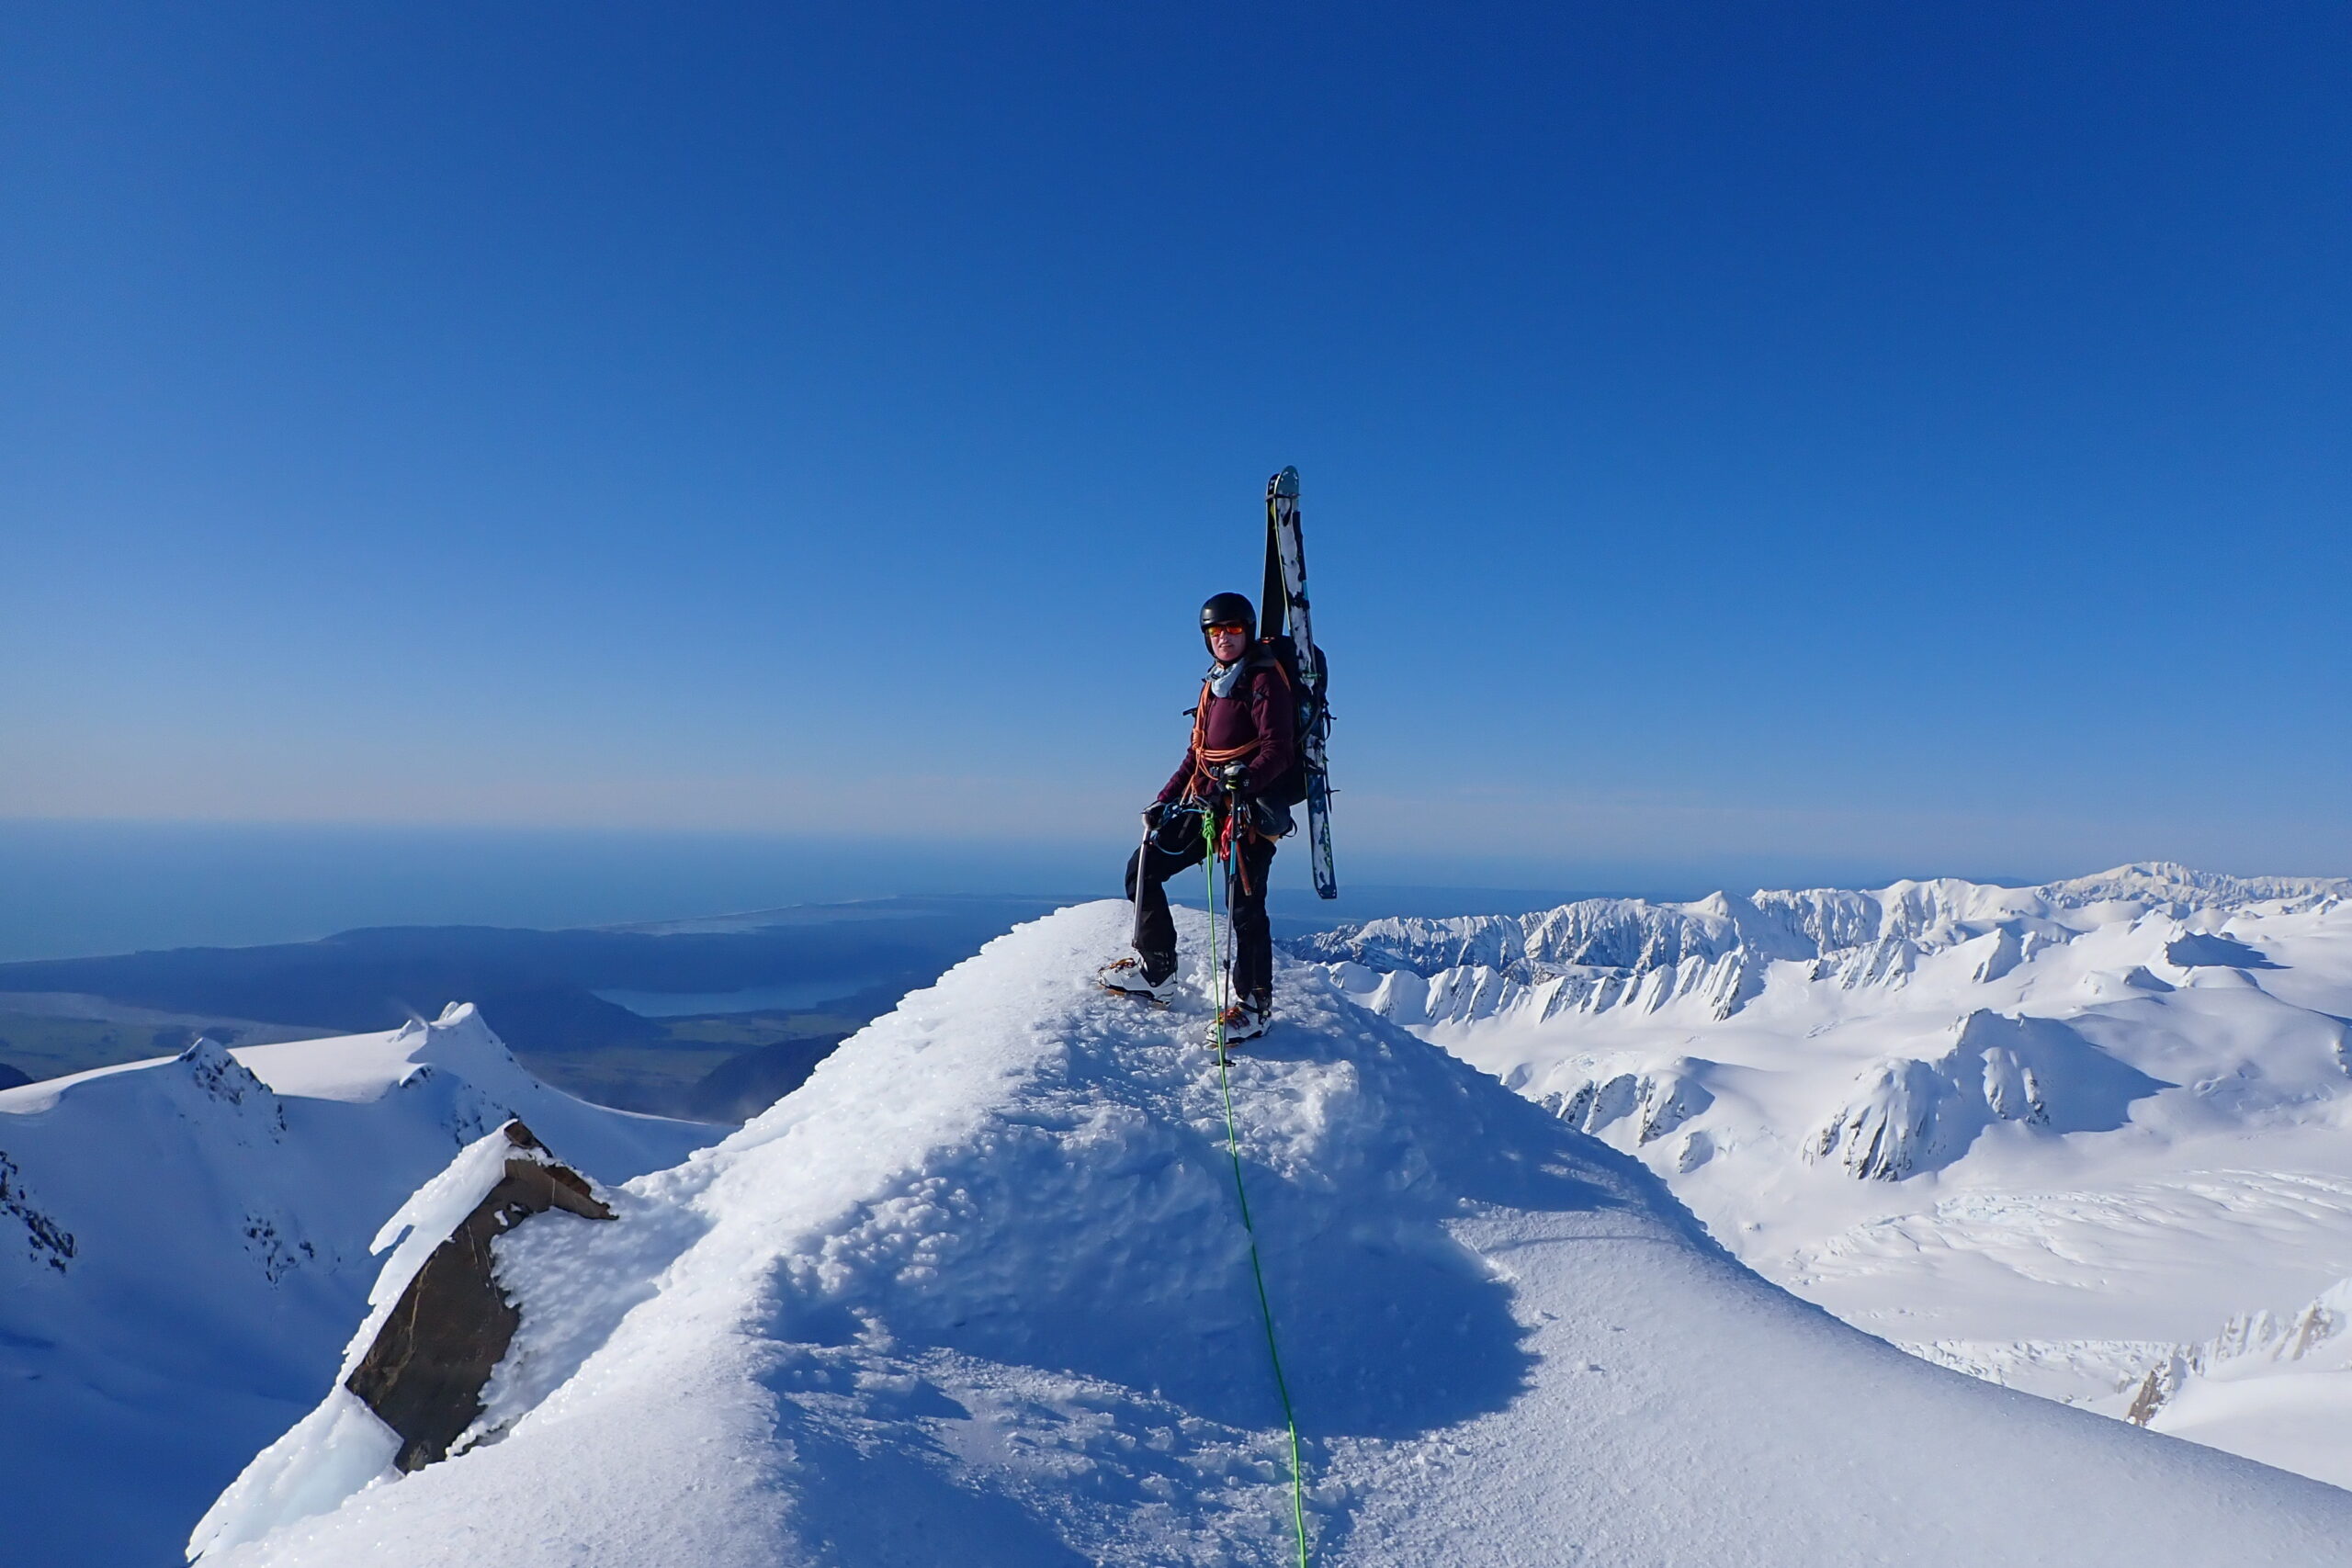 Ski mountaineering Franz Josef Glacier/Kā Roimata o Hine Hukatere backcountry skiing